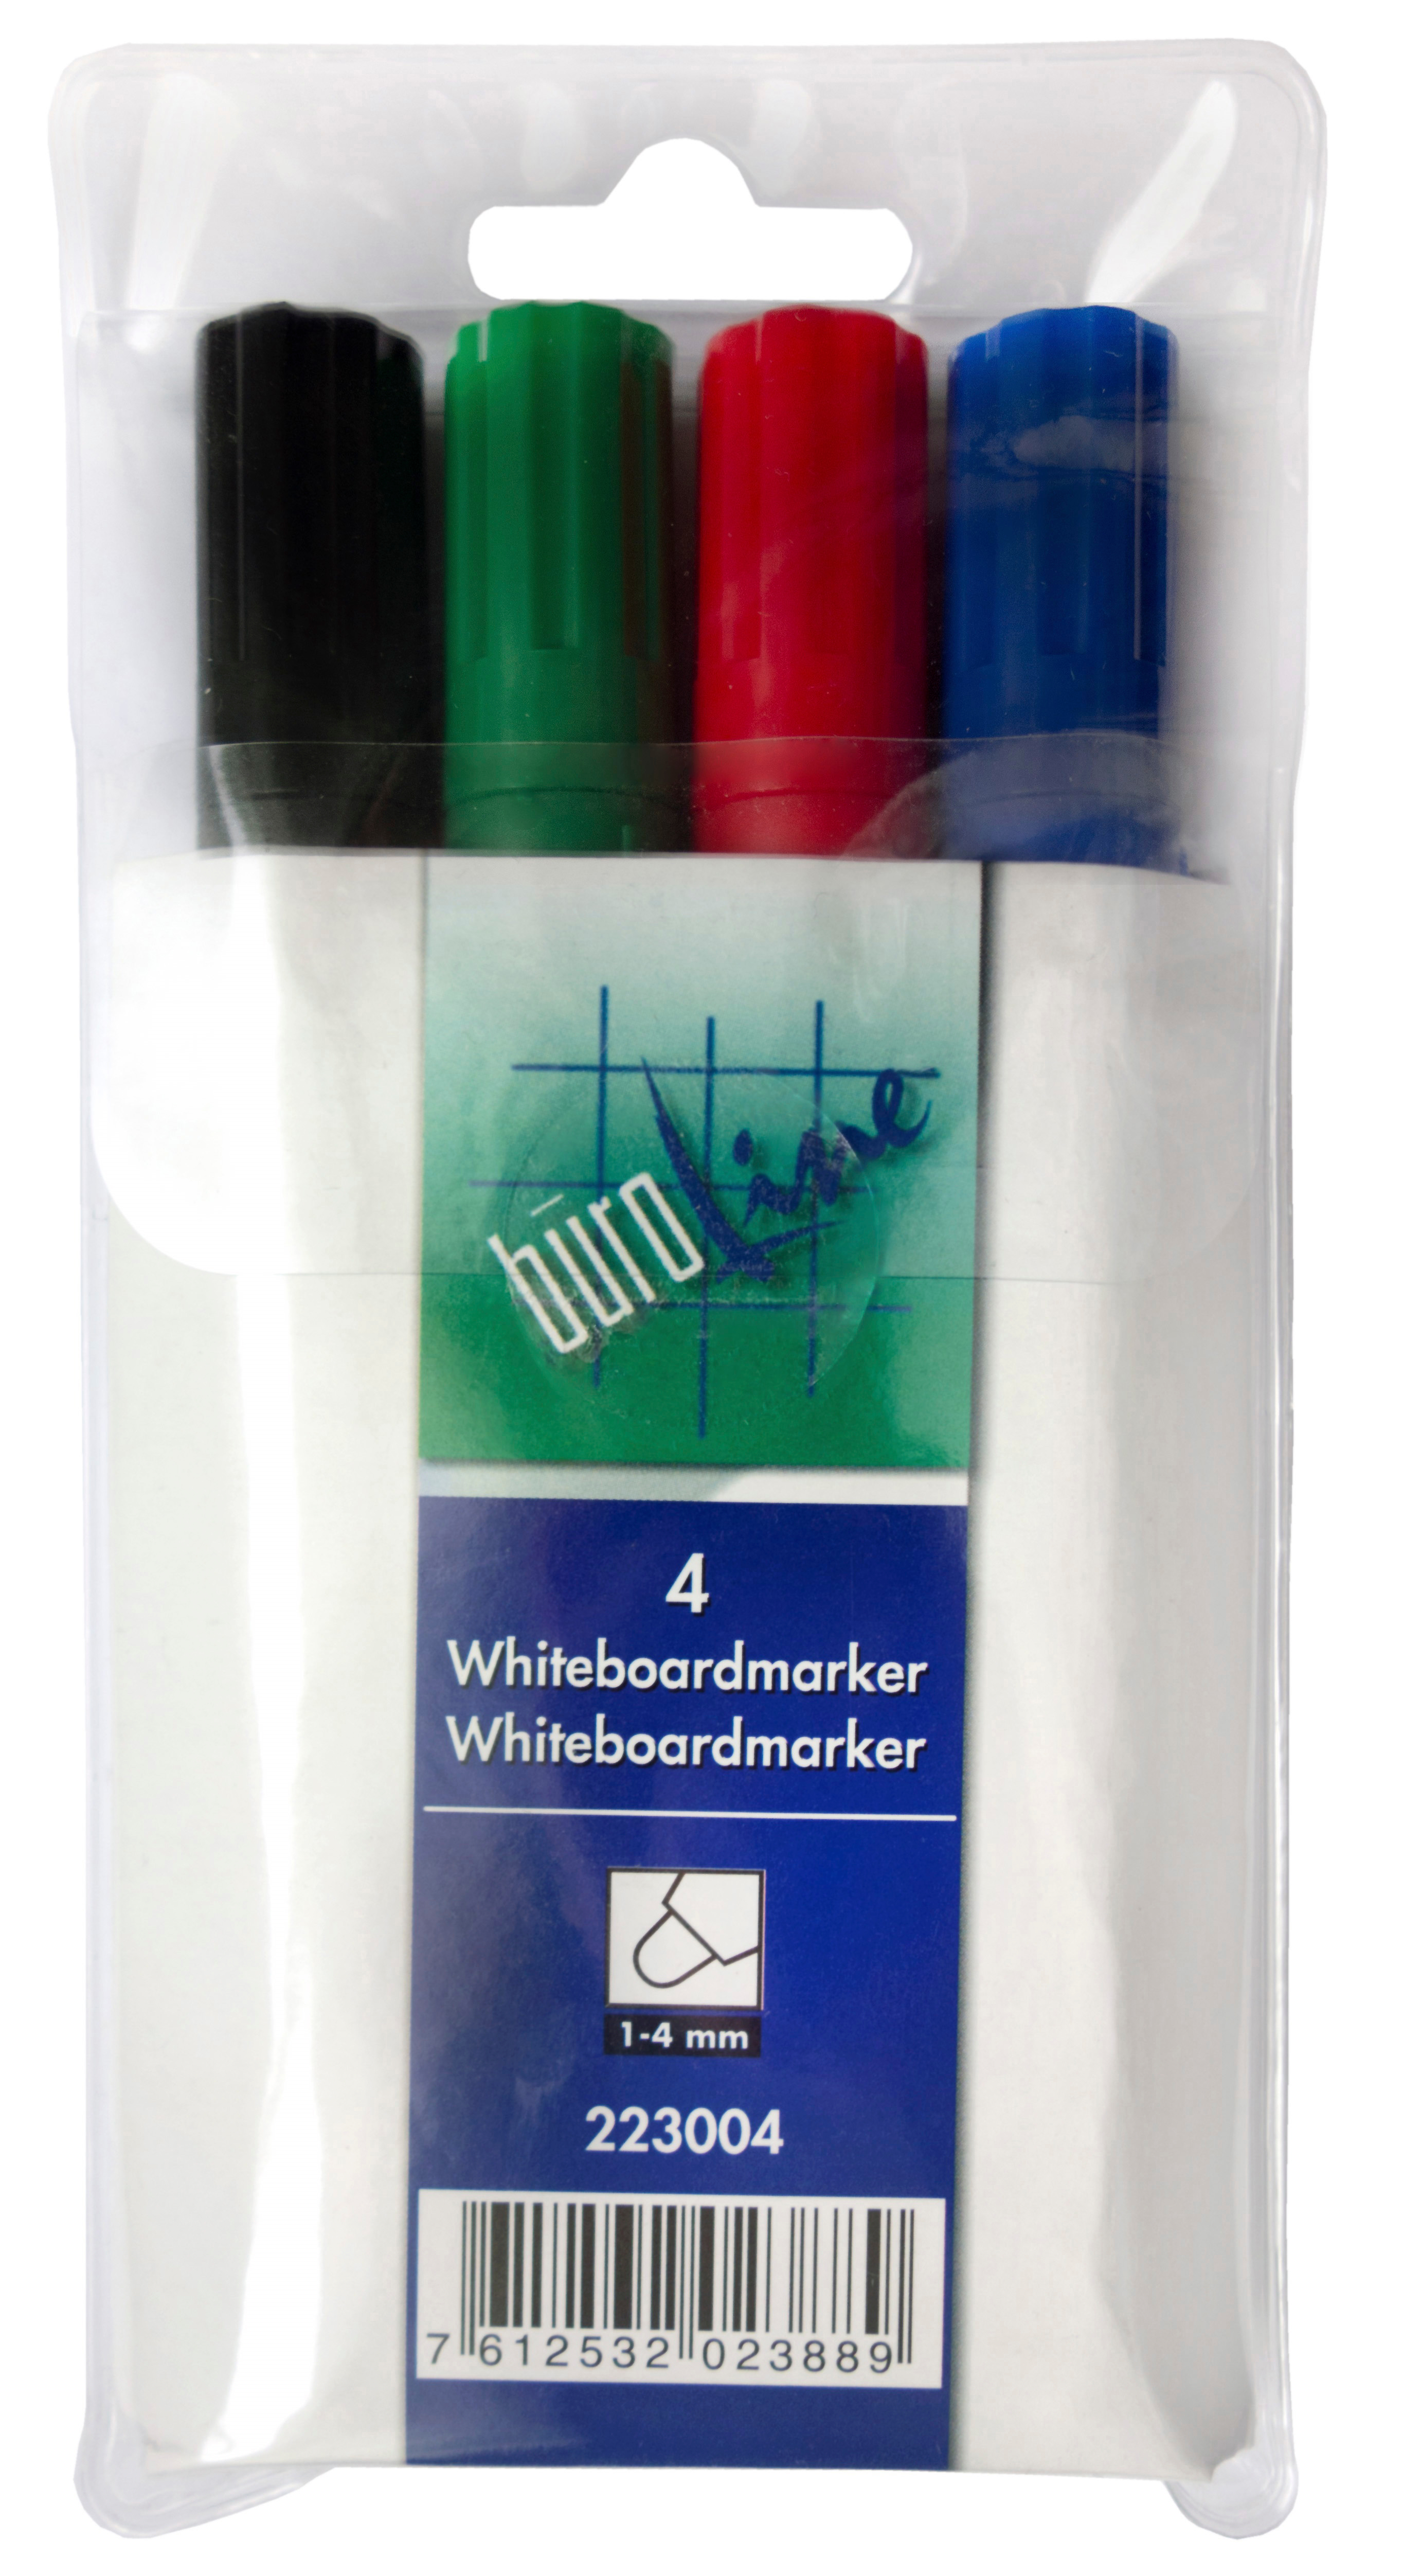 BÜROLINE Whiteboard Marker 1-4mm 223004 4 couleurs, étui